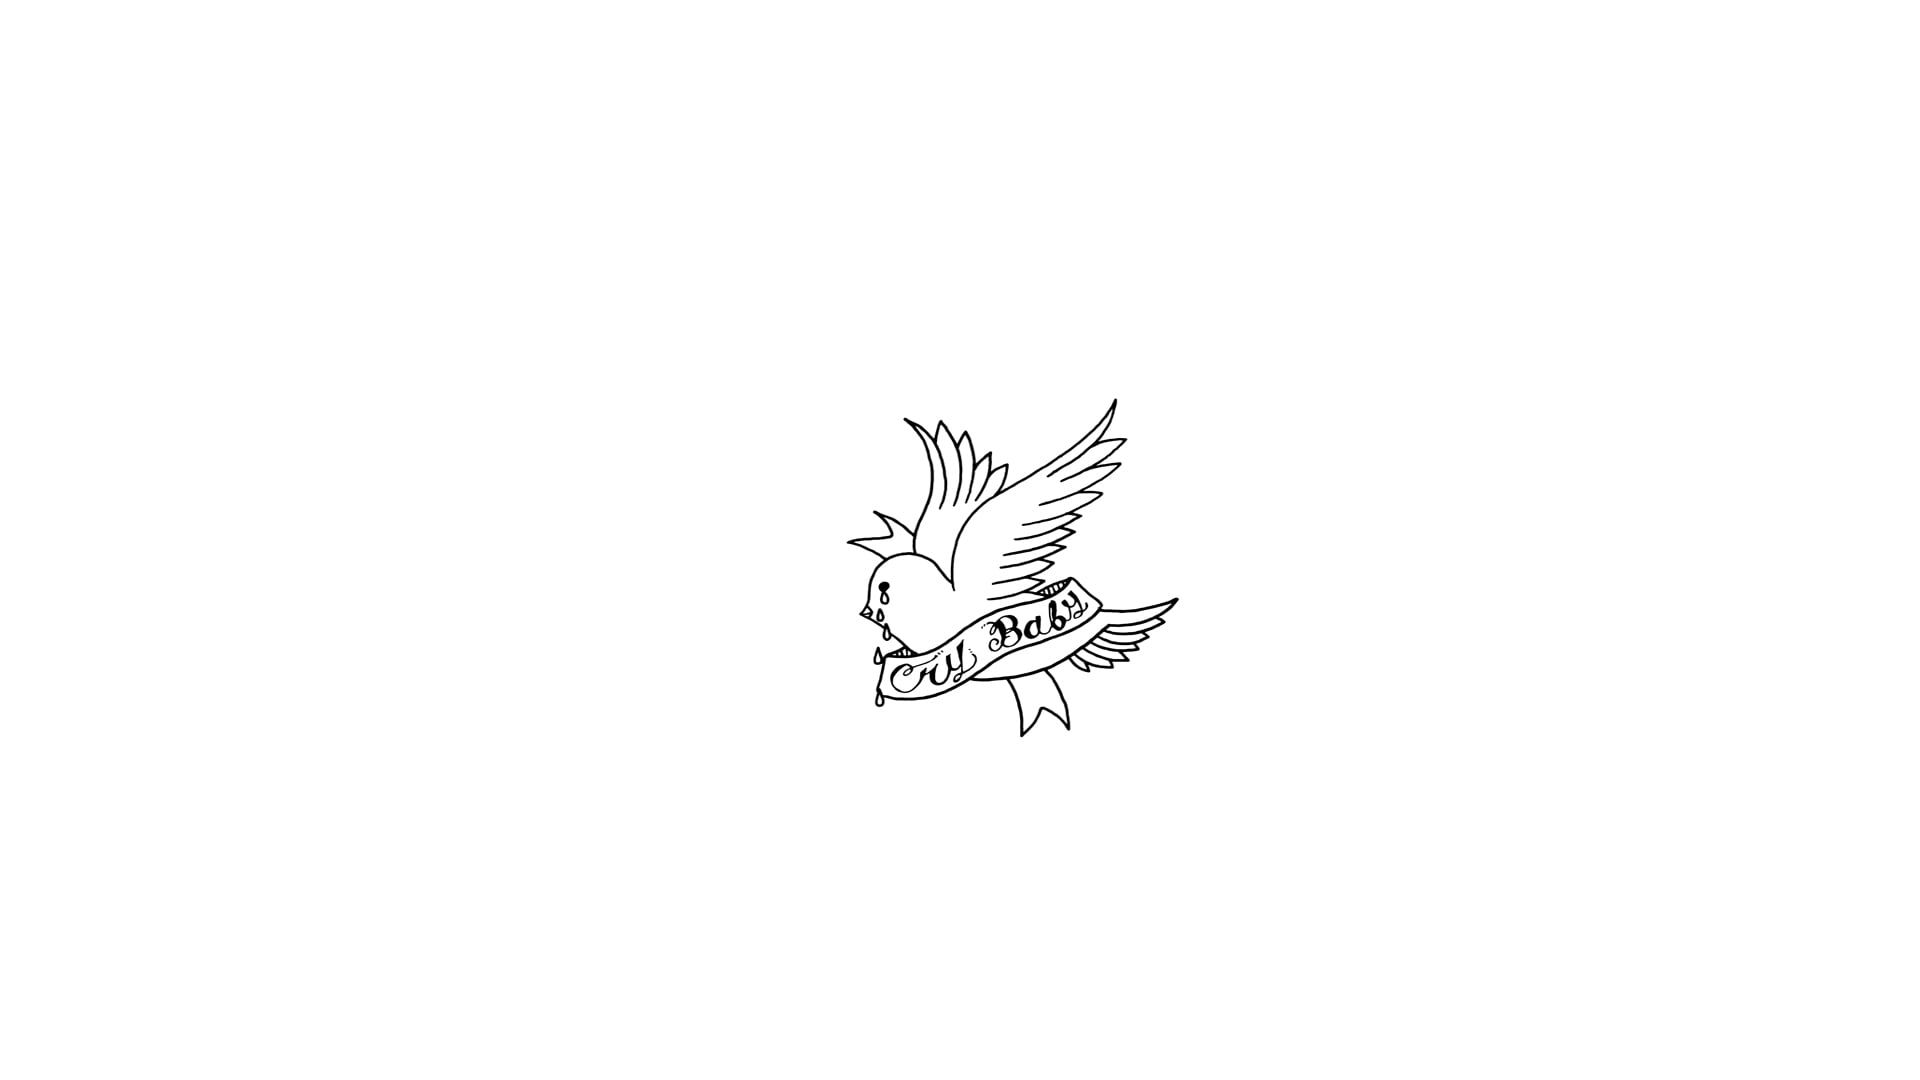 Black and white bird illustration, lil peep, crybaby